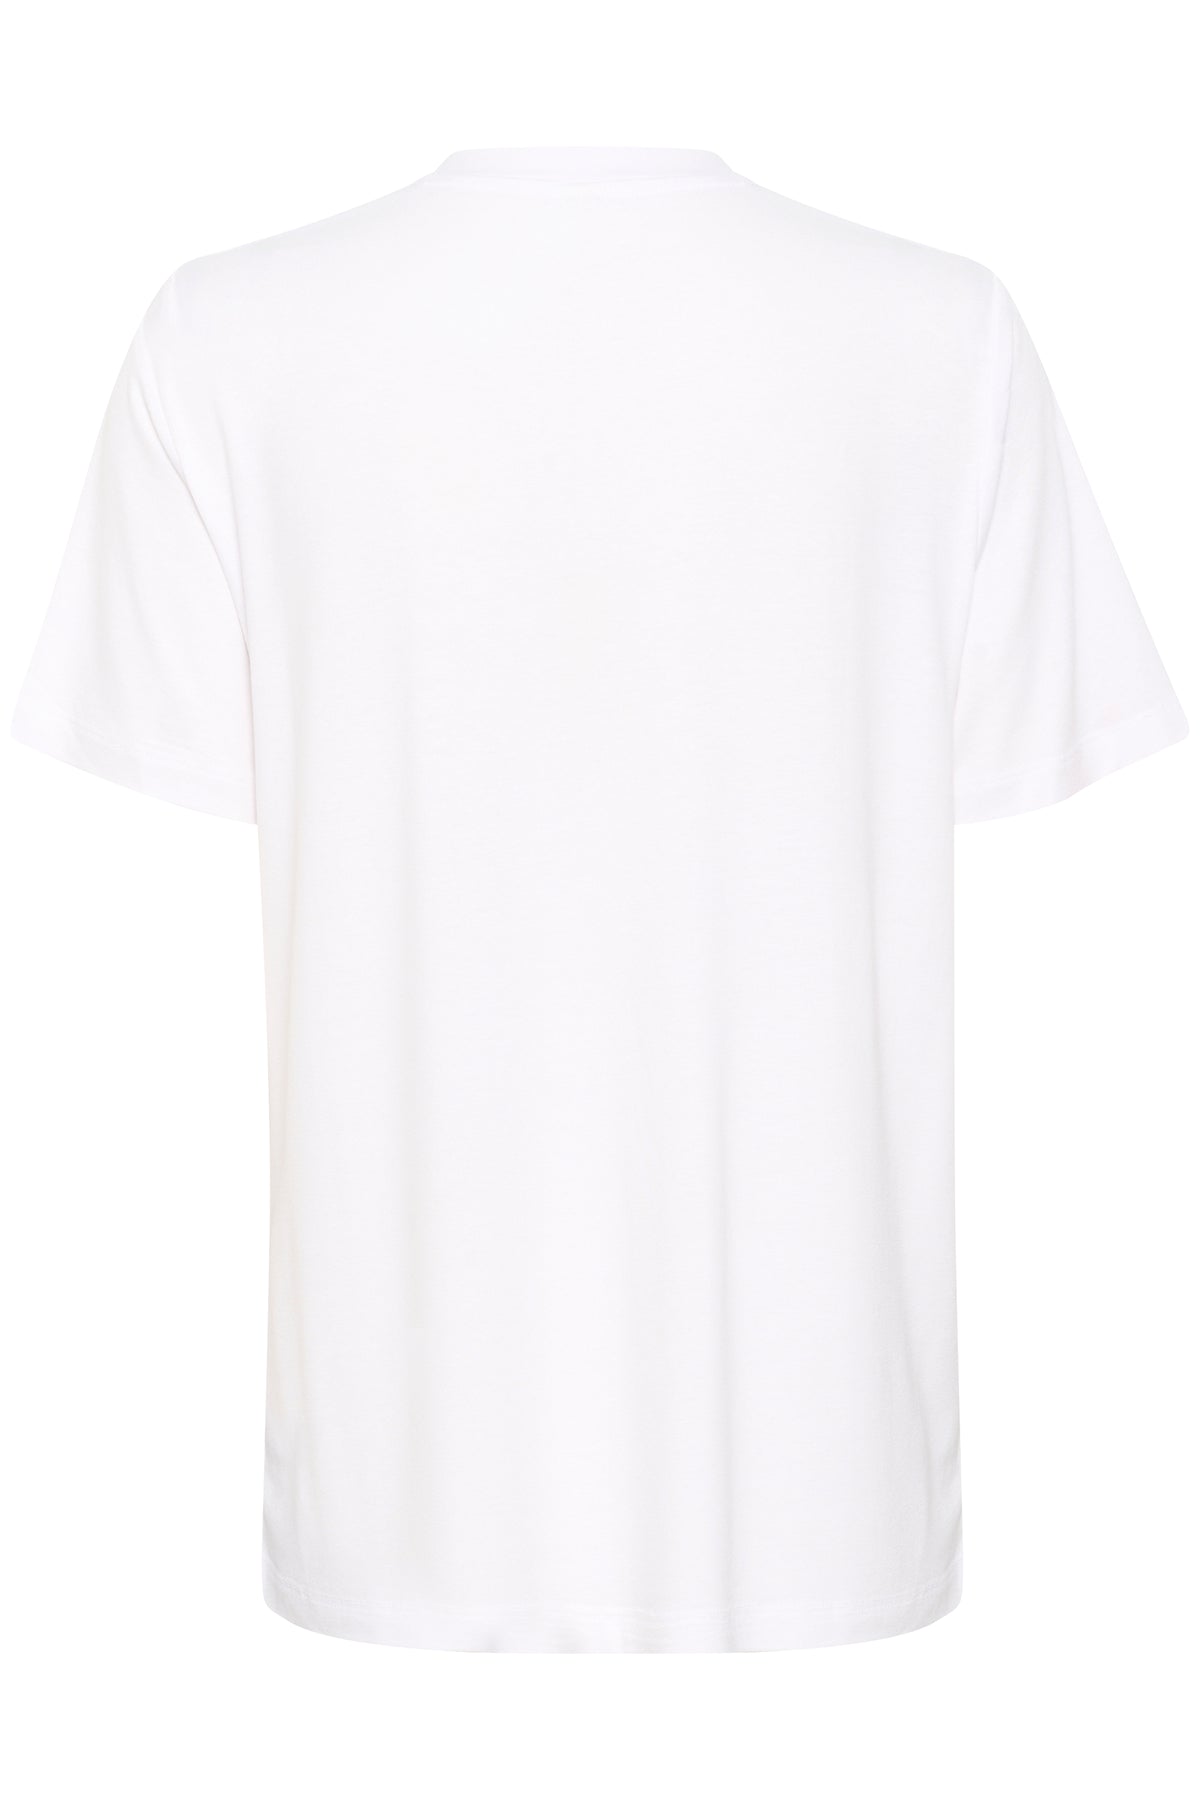 Kaffe Kaelin White/Pink Flower Print T-Shirt, 10508351